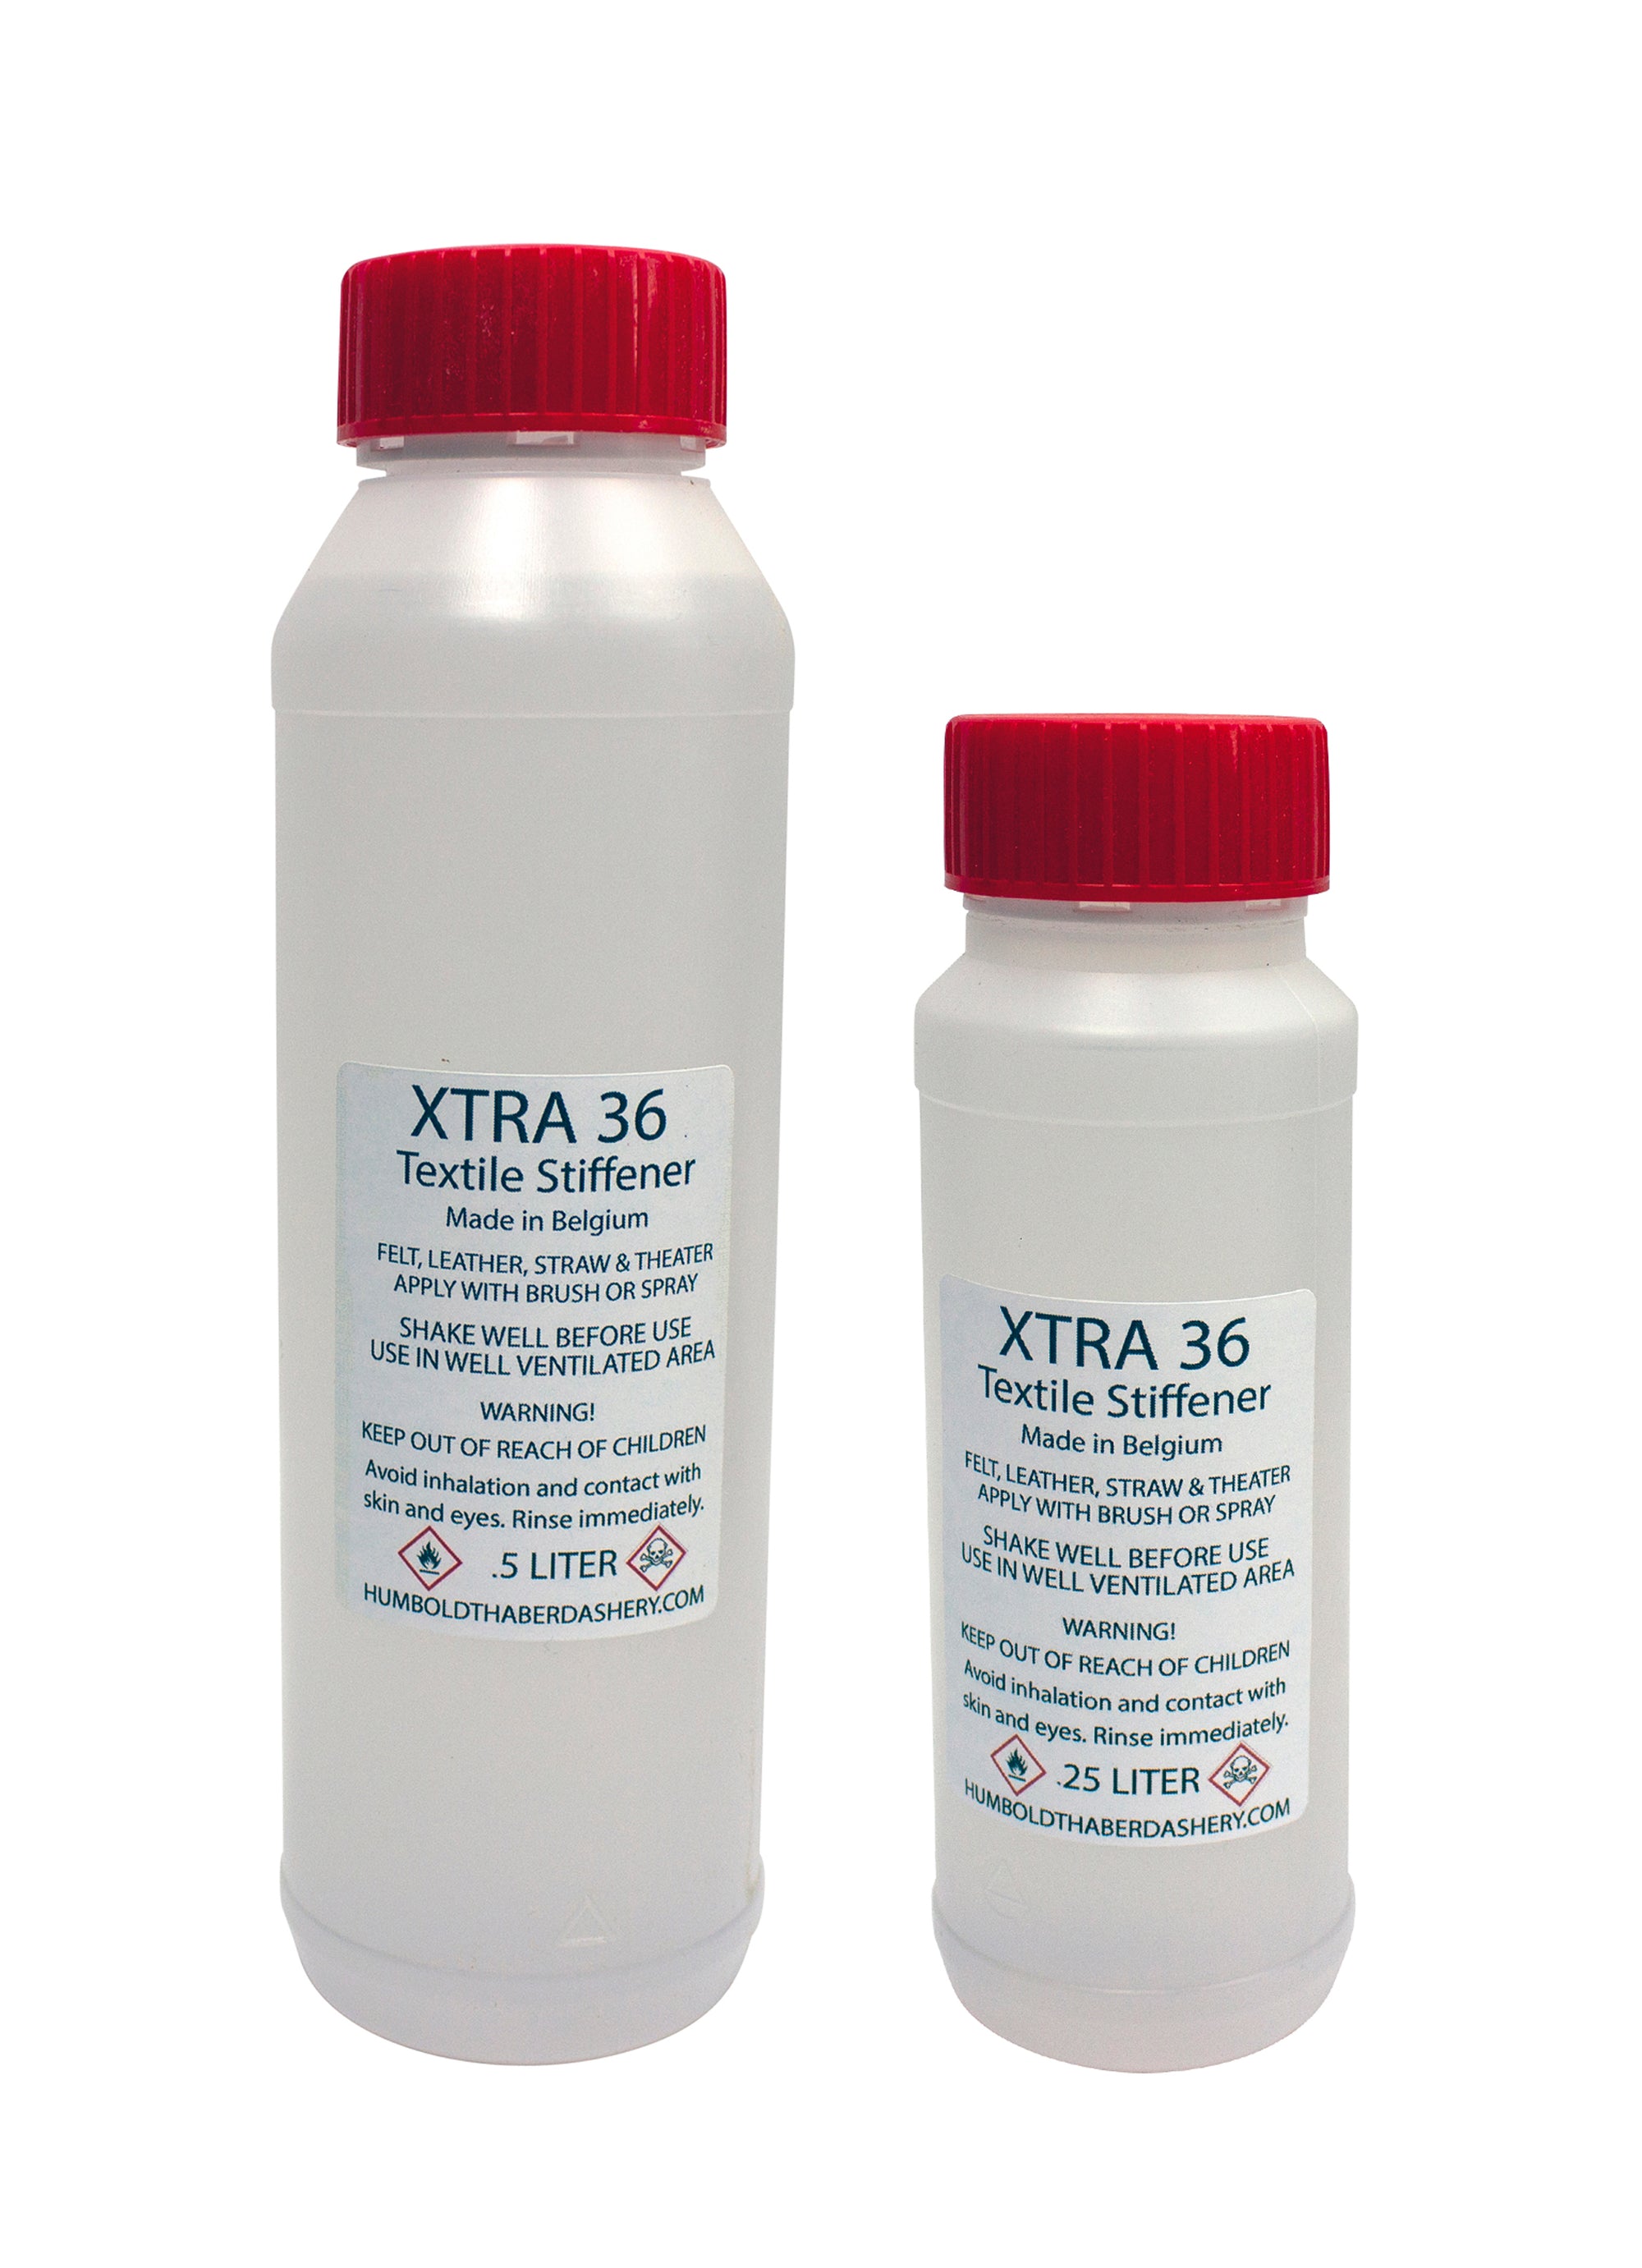 XTRA 36 Textile Stiffener